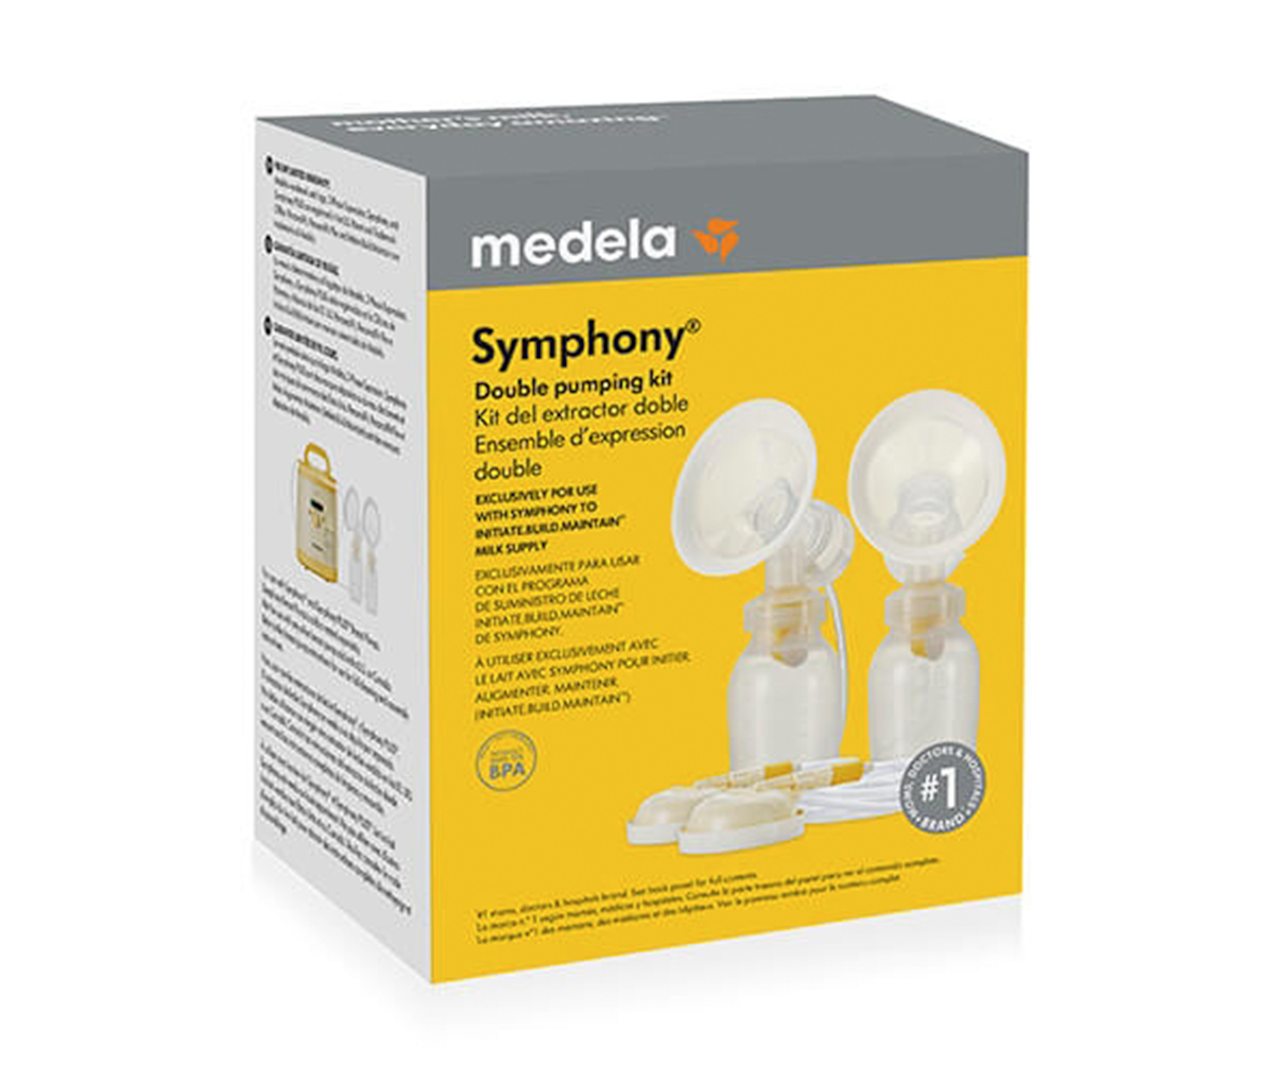 Medela Symphony Double Pumping Kit